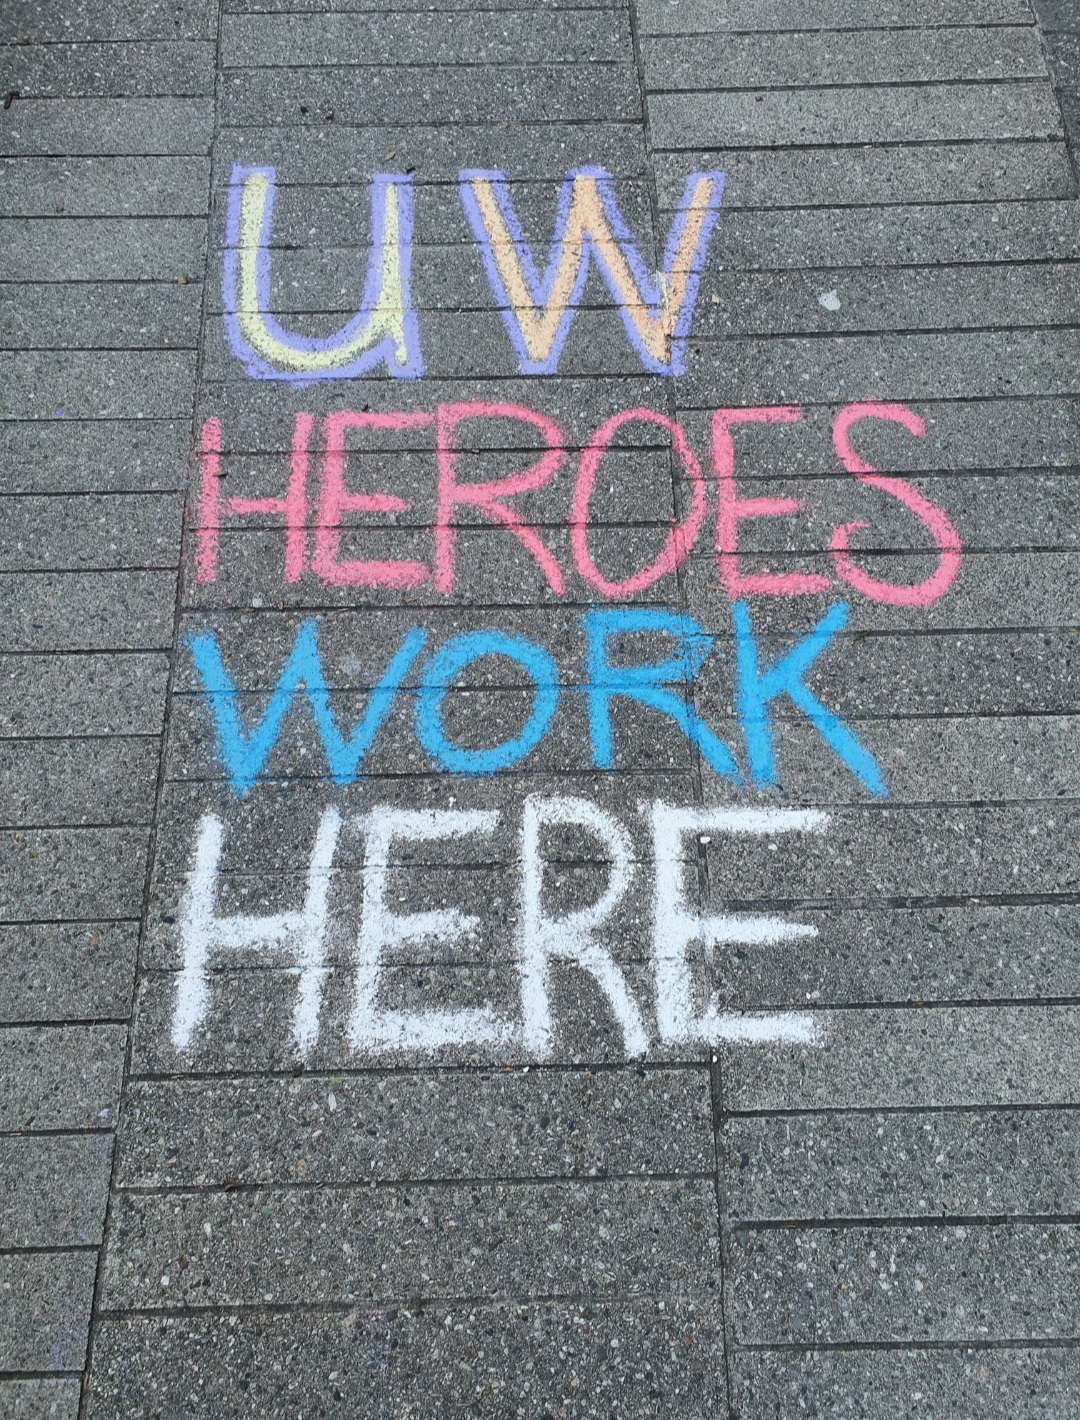 Sidewalk graffiti reading: UW Heroes Work Here.